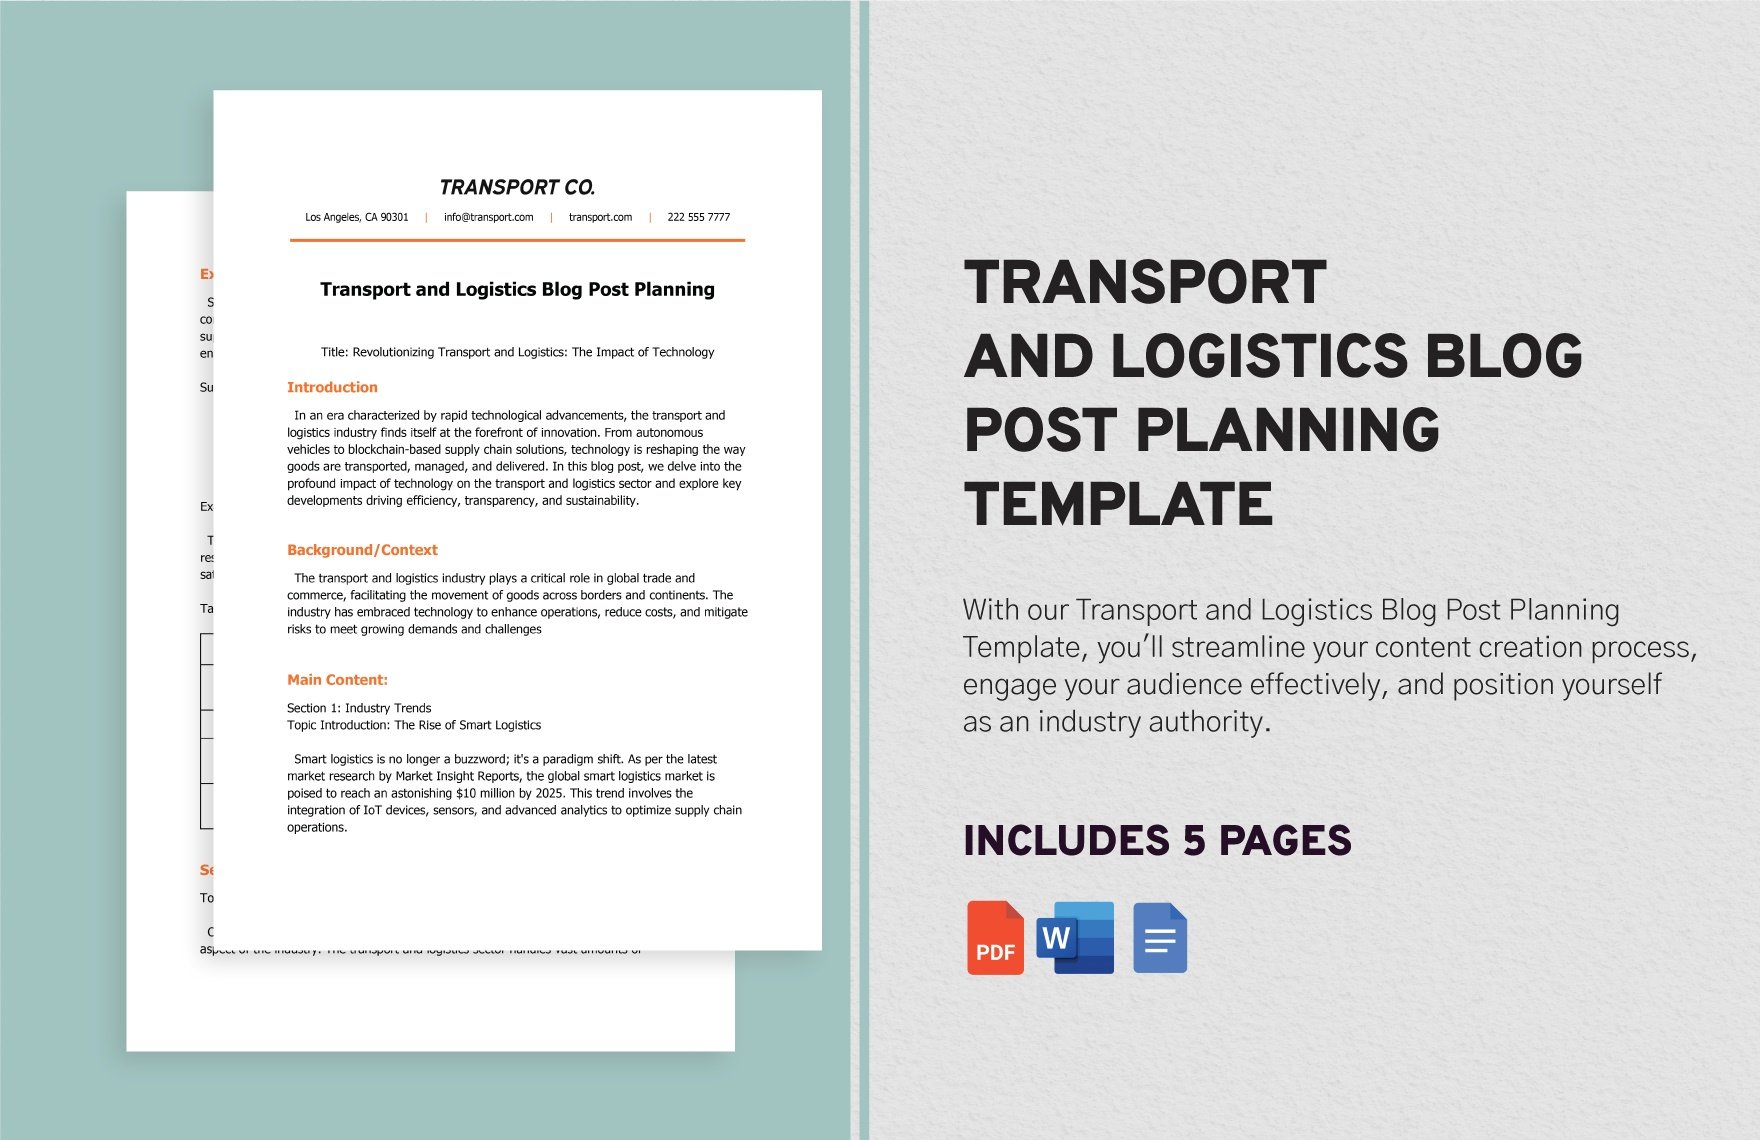 Transport and Logistics Blog Post Planning Template